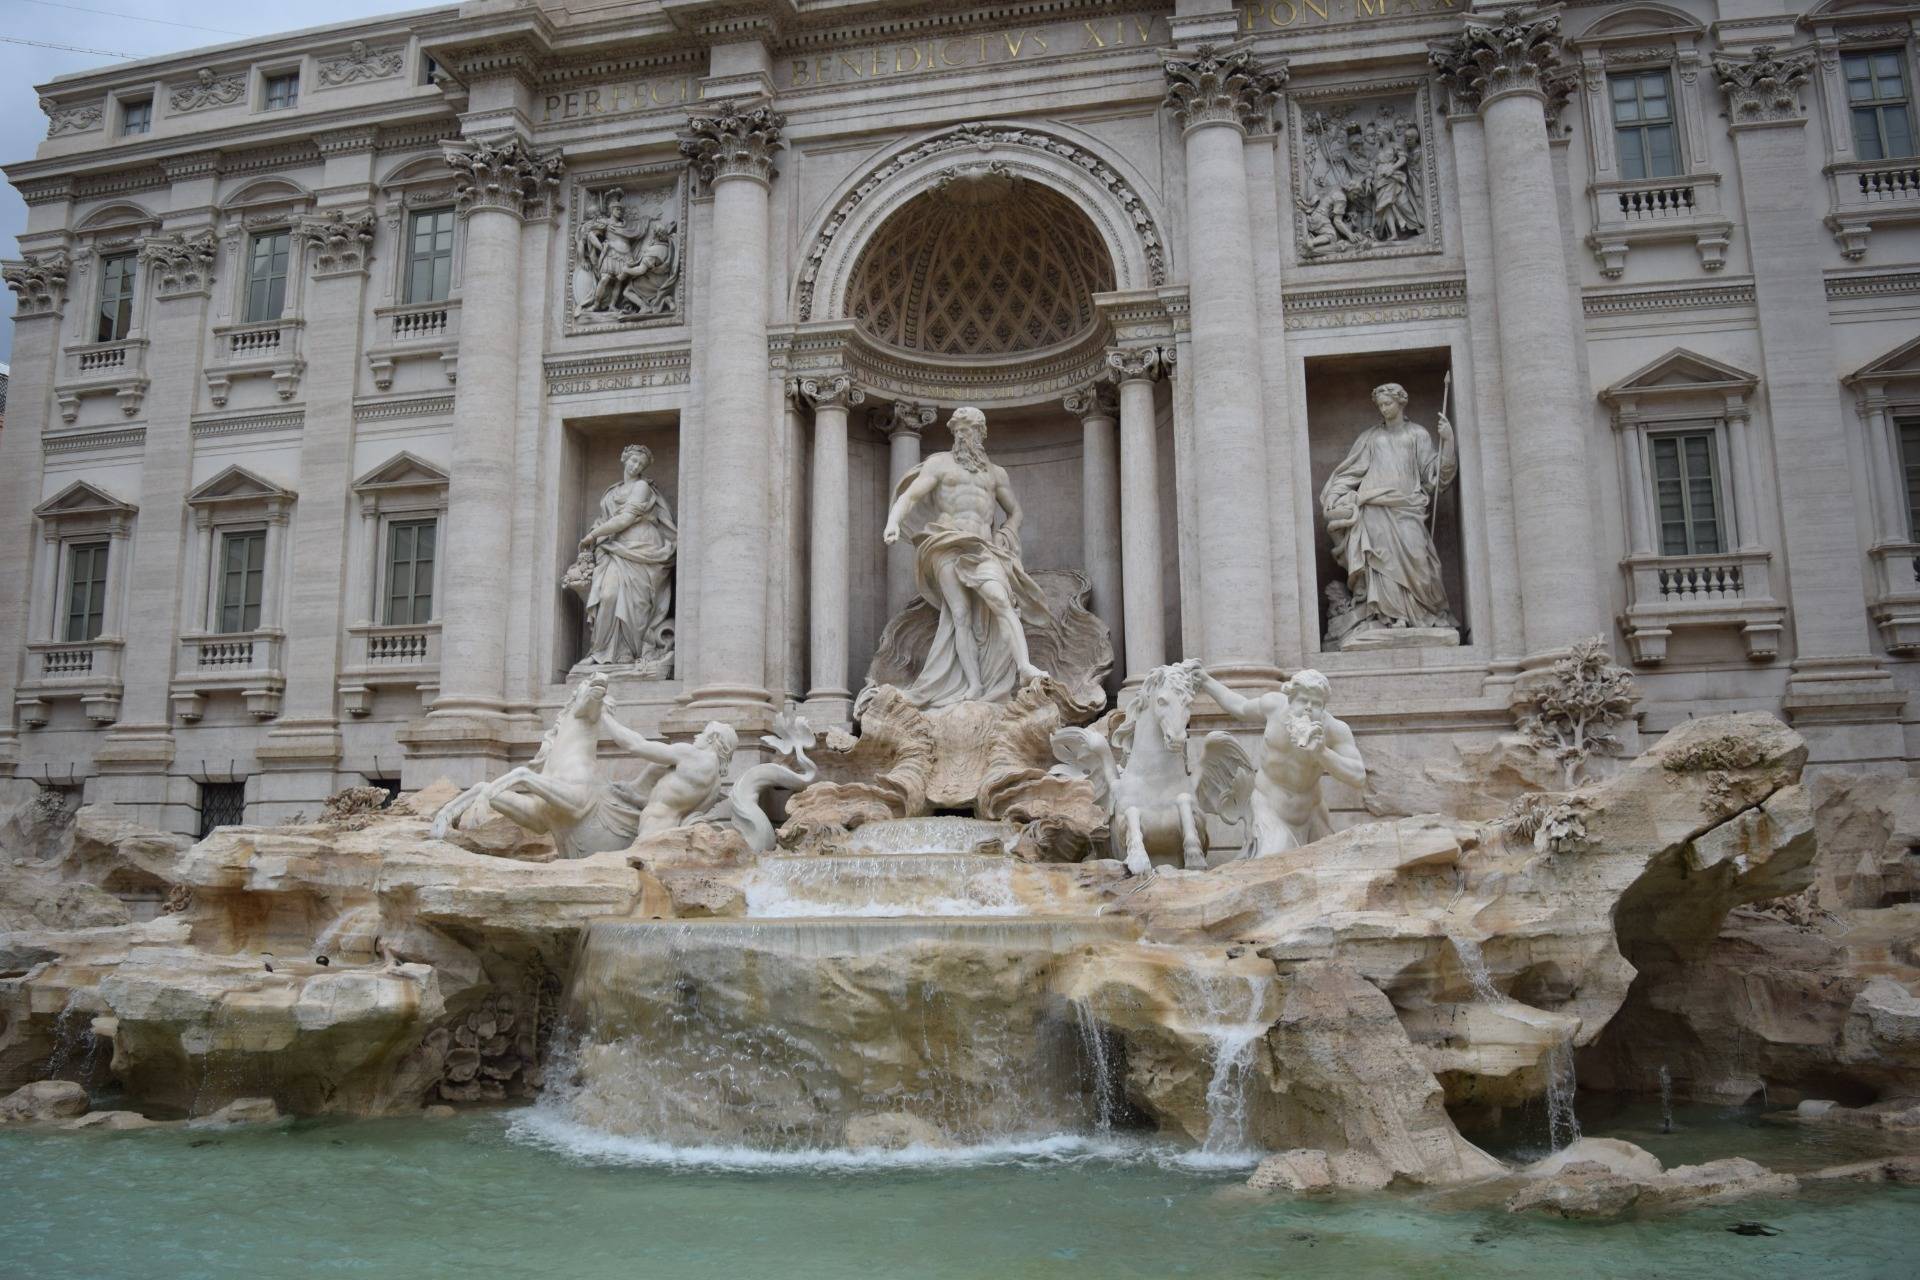 The amazing Trevi Fountain